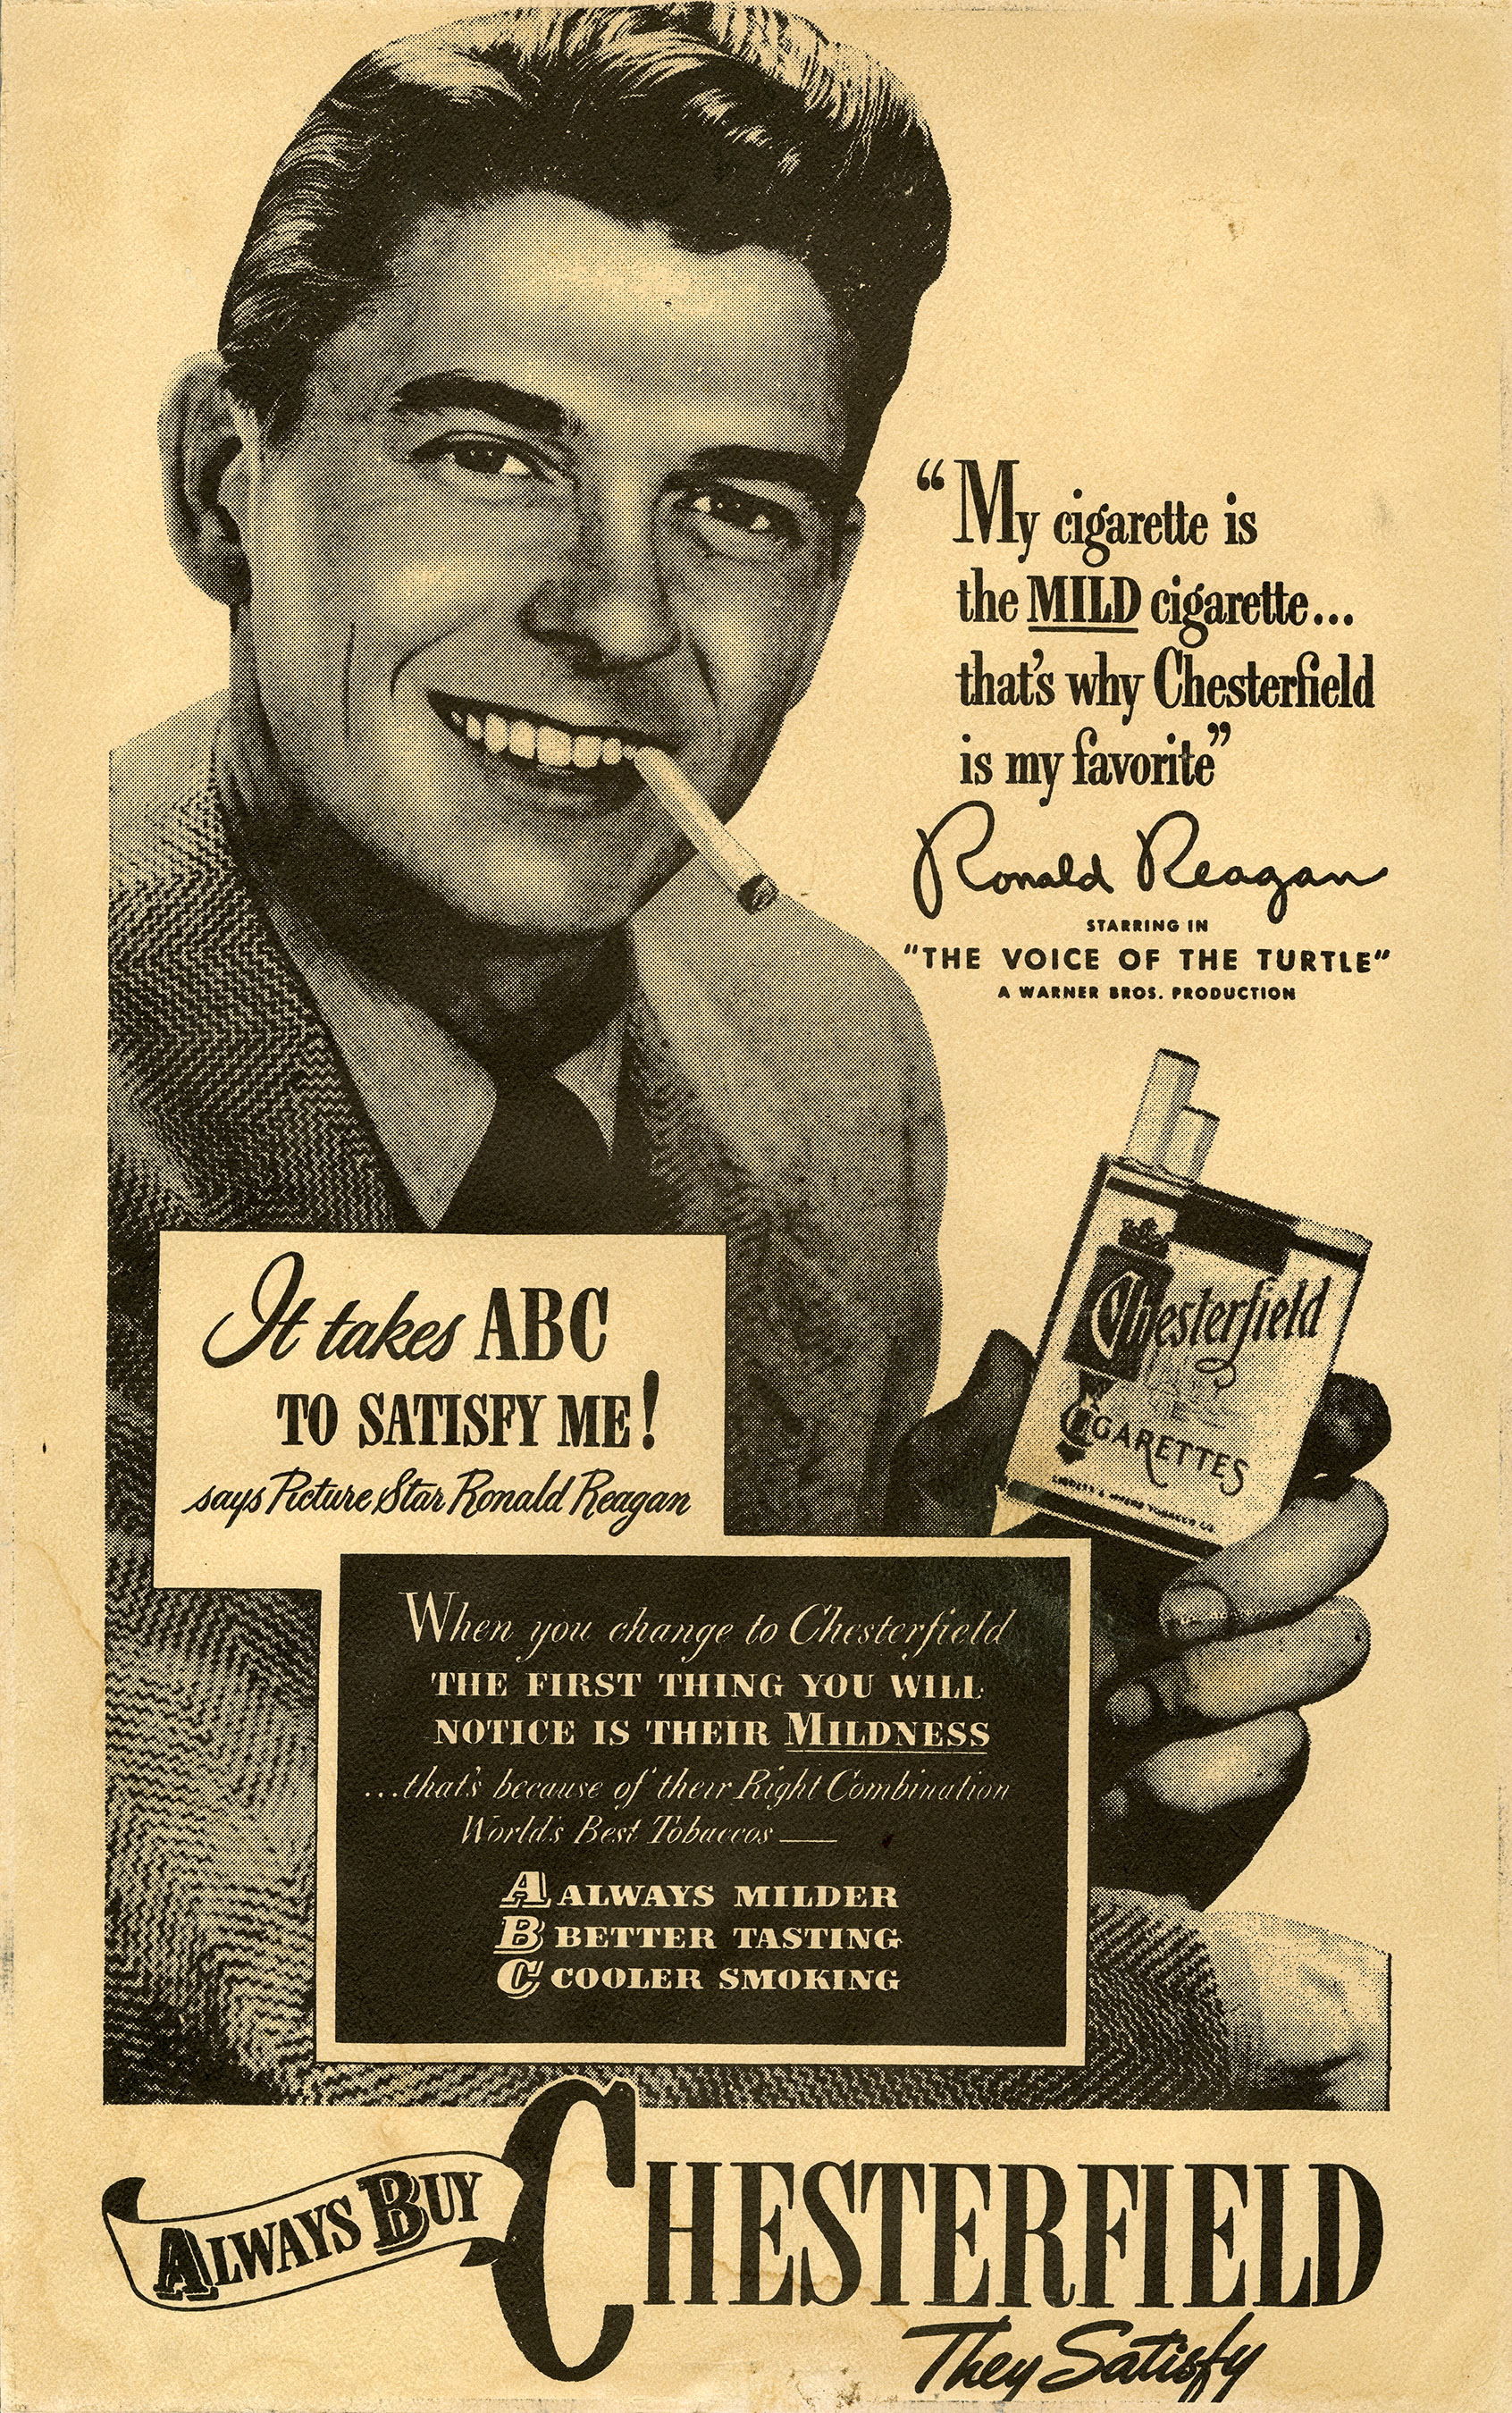 Ronald Reagan Chesterfield cigarette advertisement, 1940s 